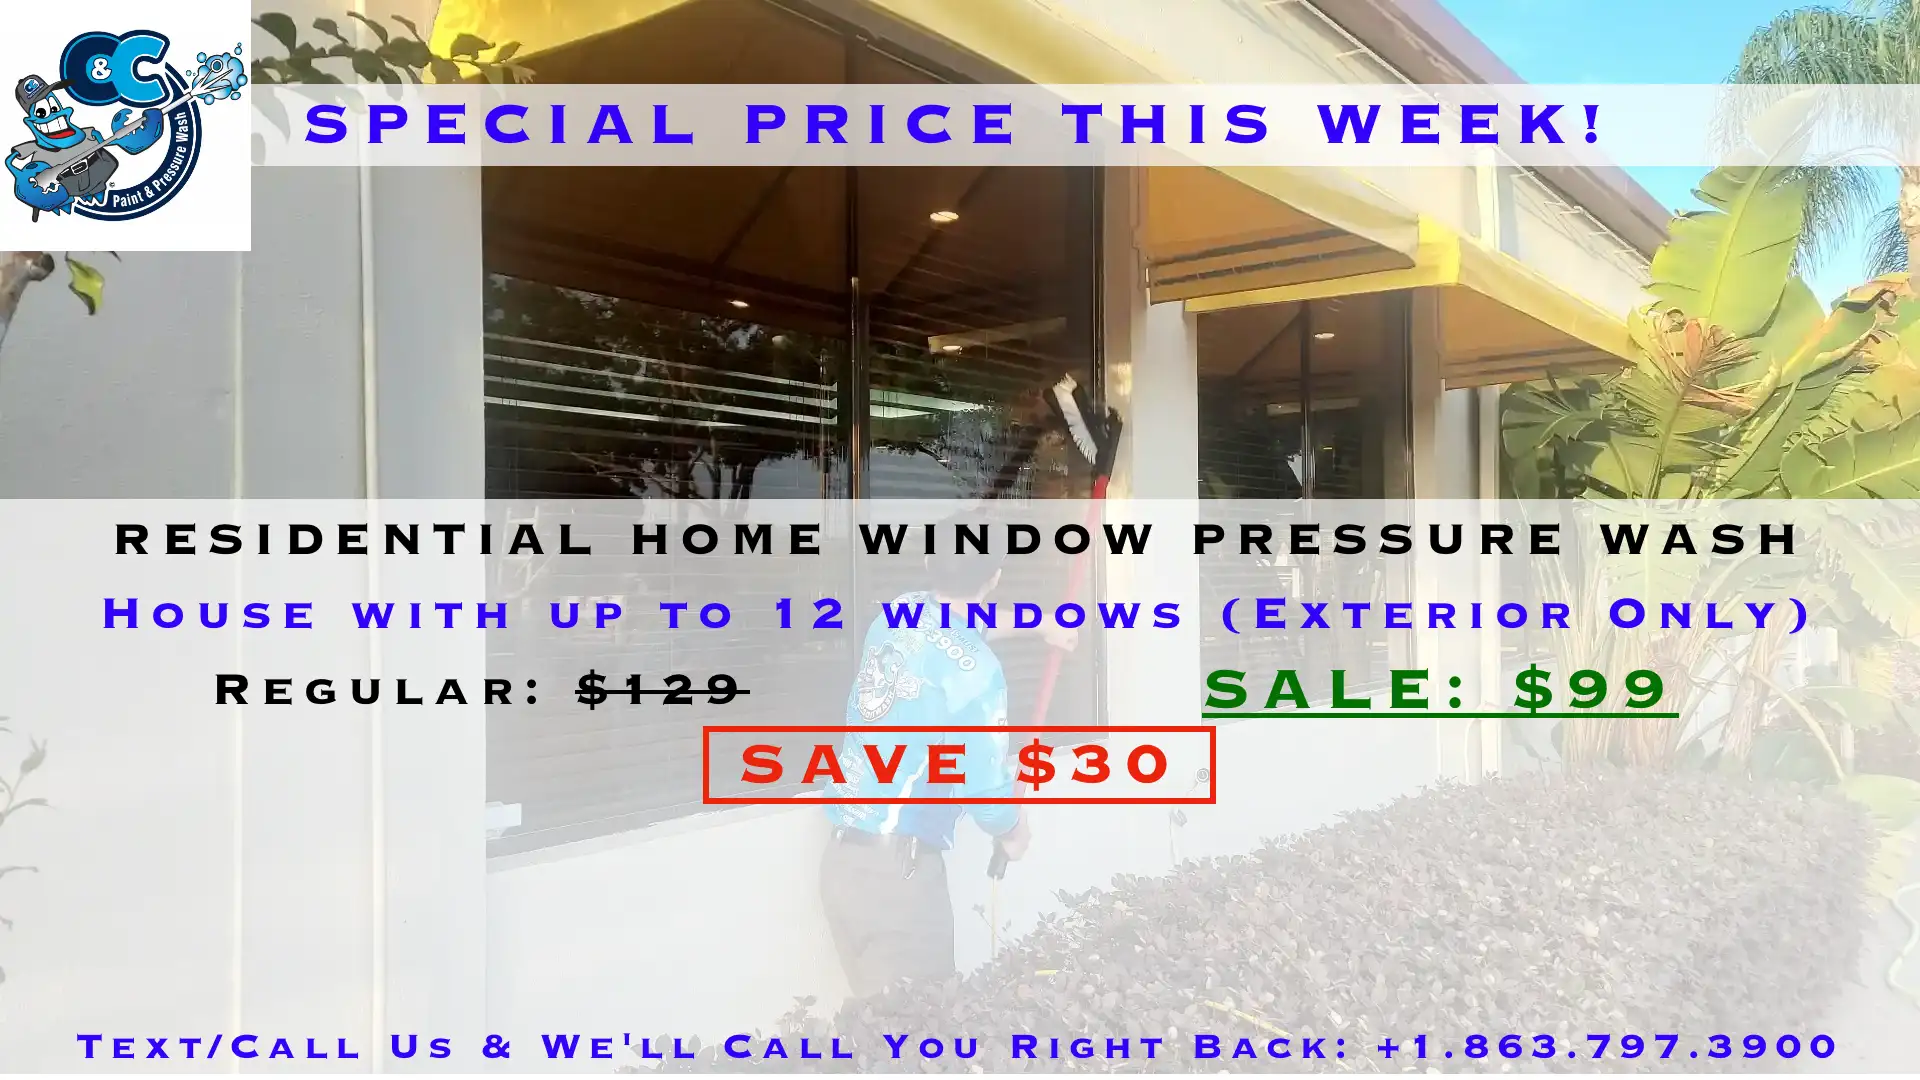 1 - RESIDENTIAL HOME WINDOW PRESSURE WASH